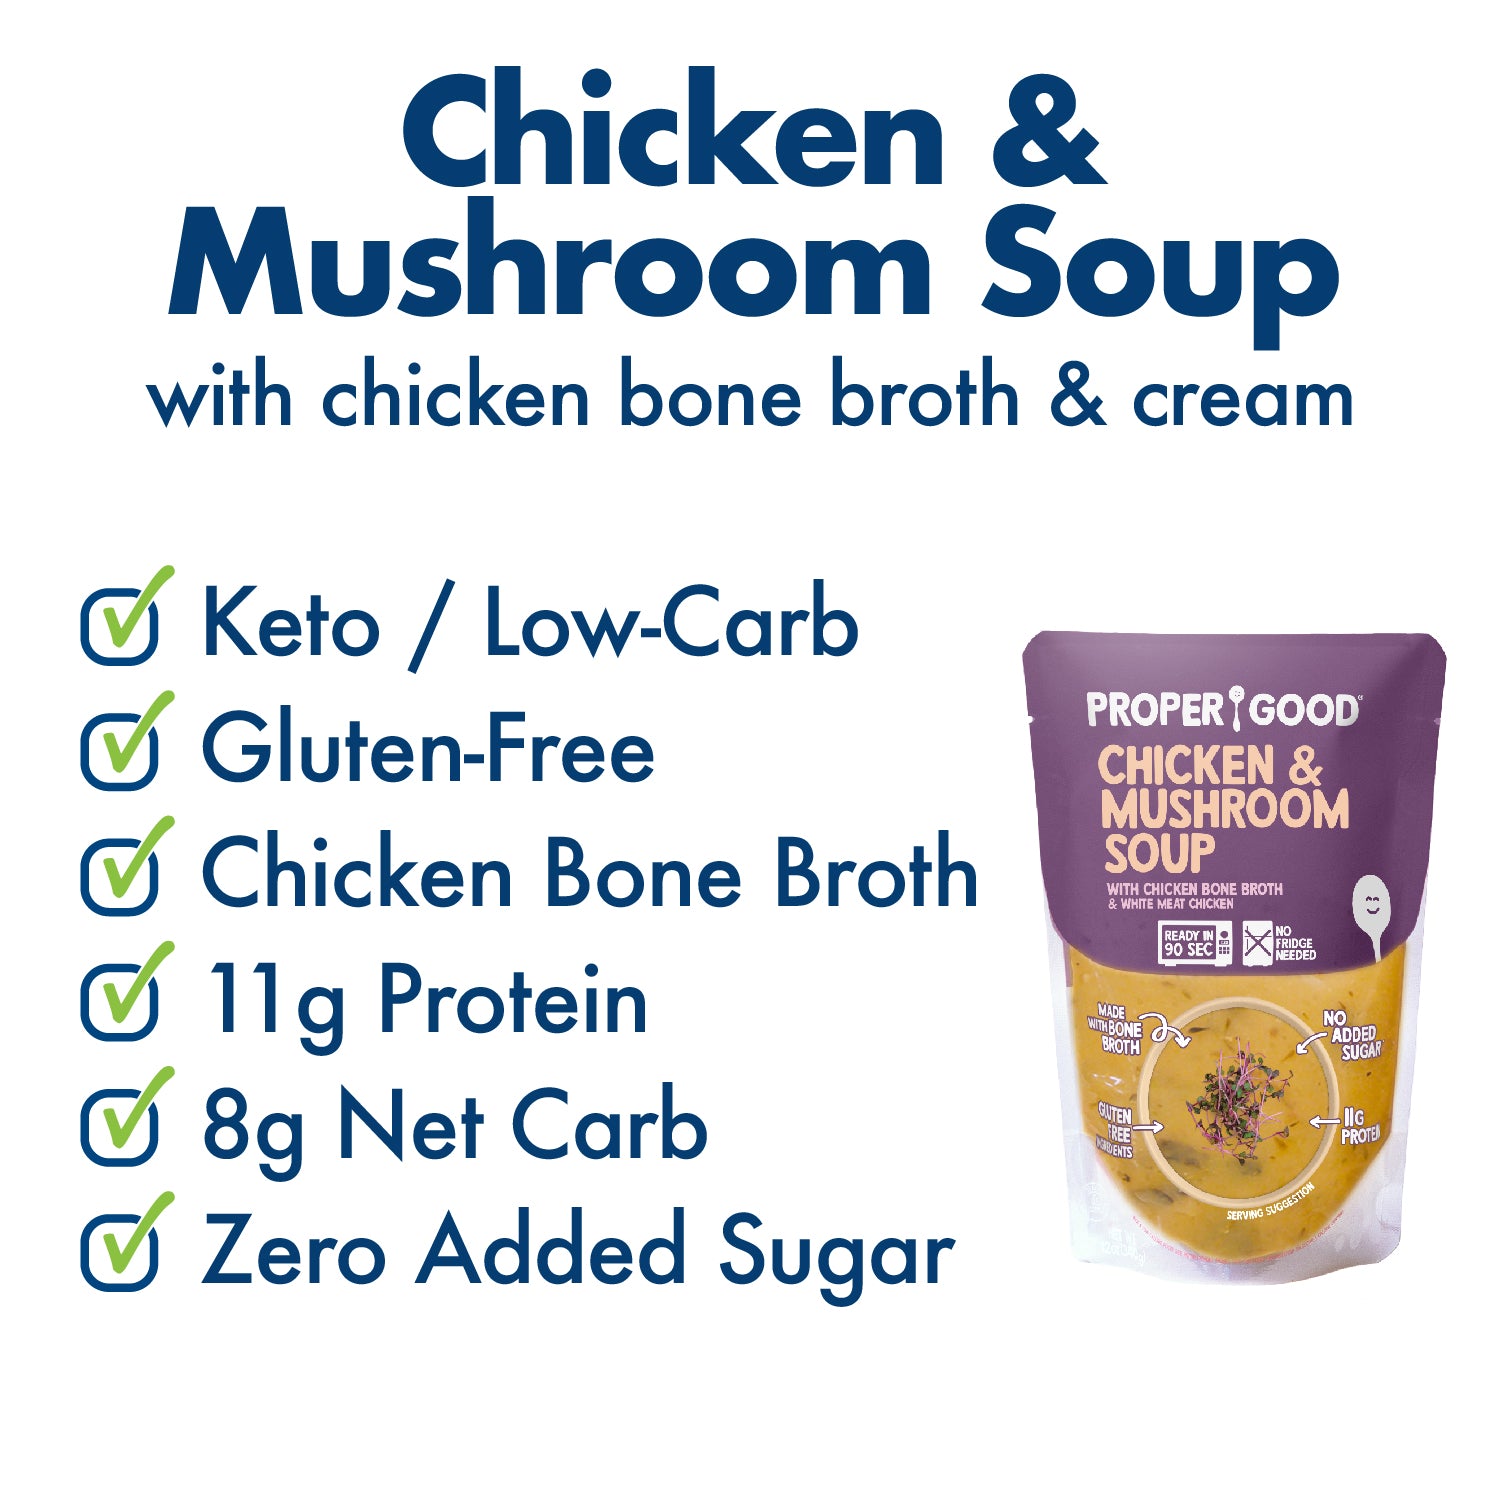 Chicken & Mushroom Soup Benefits - Eat Proper Good